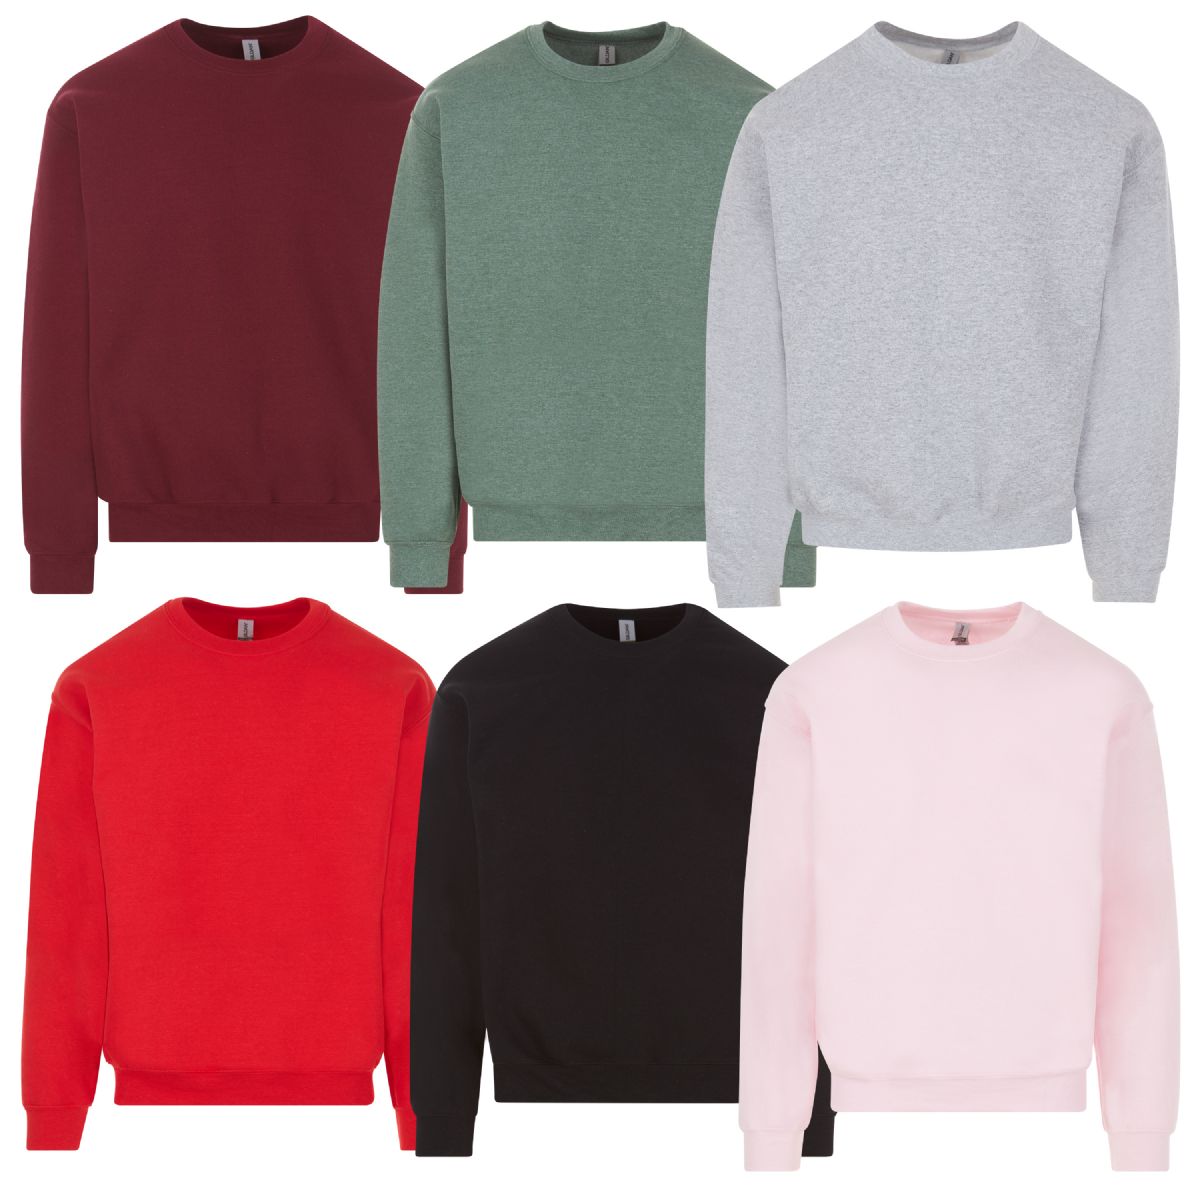 36 Pieces of Gildan Unisex Assorted Colors Fleece Sweat Shirts Size Small